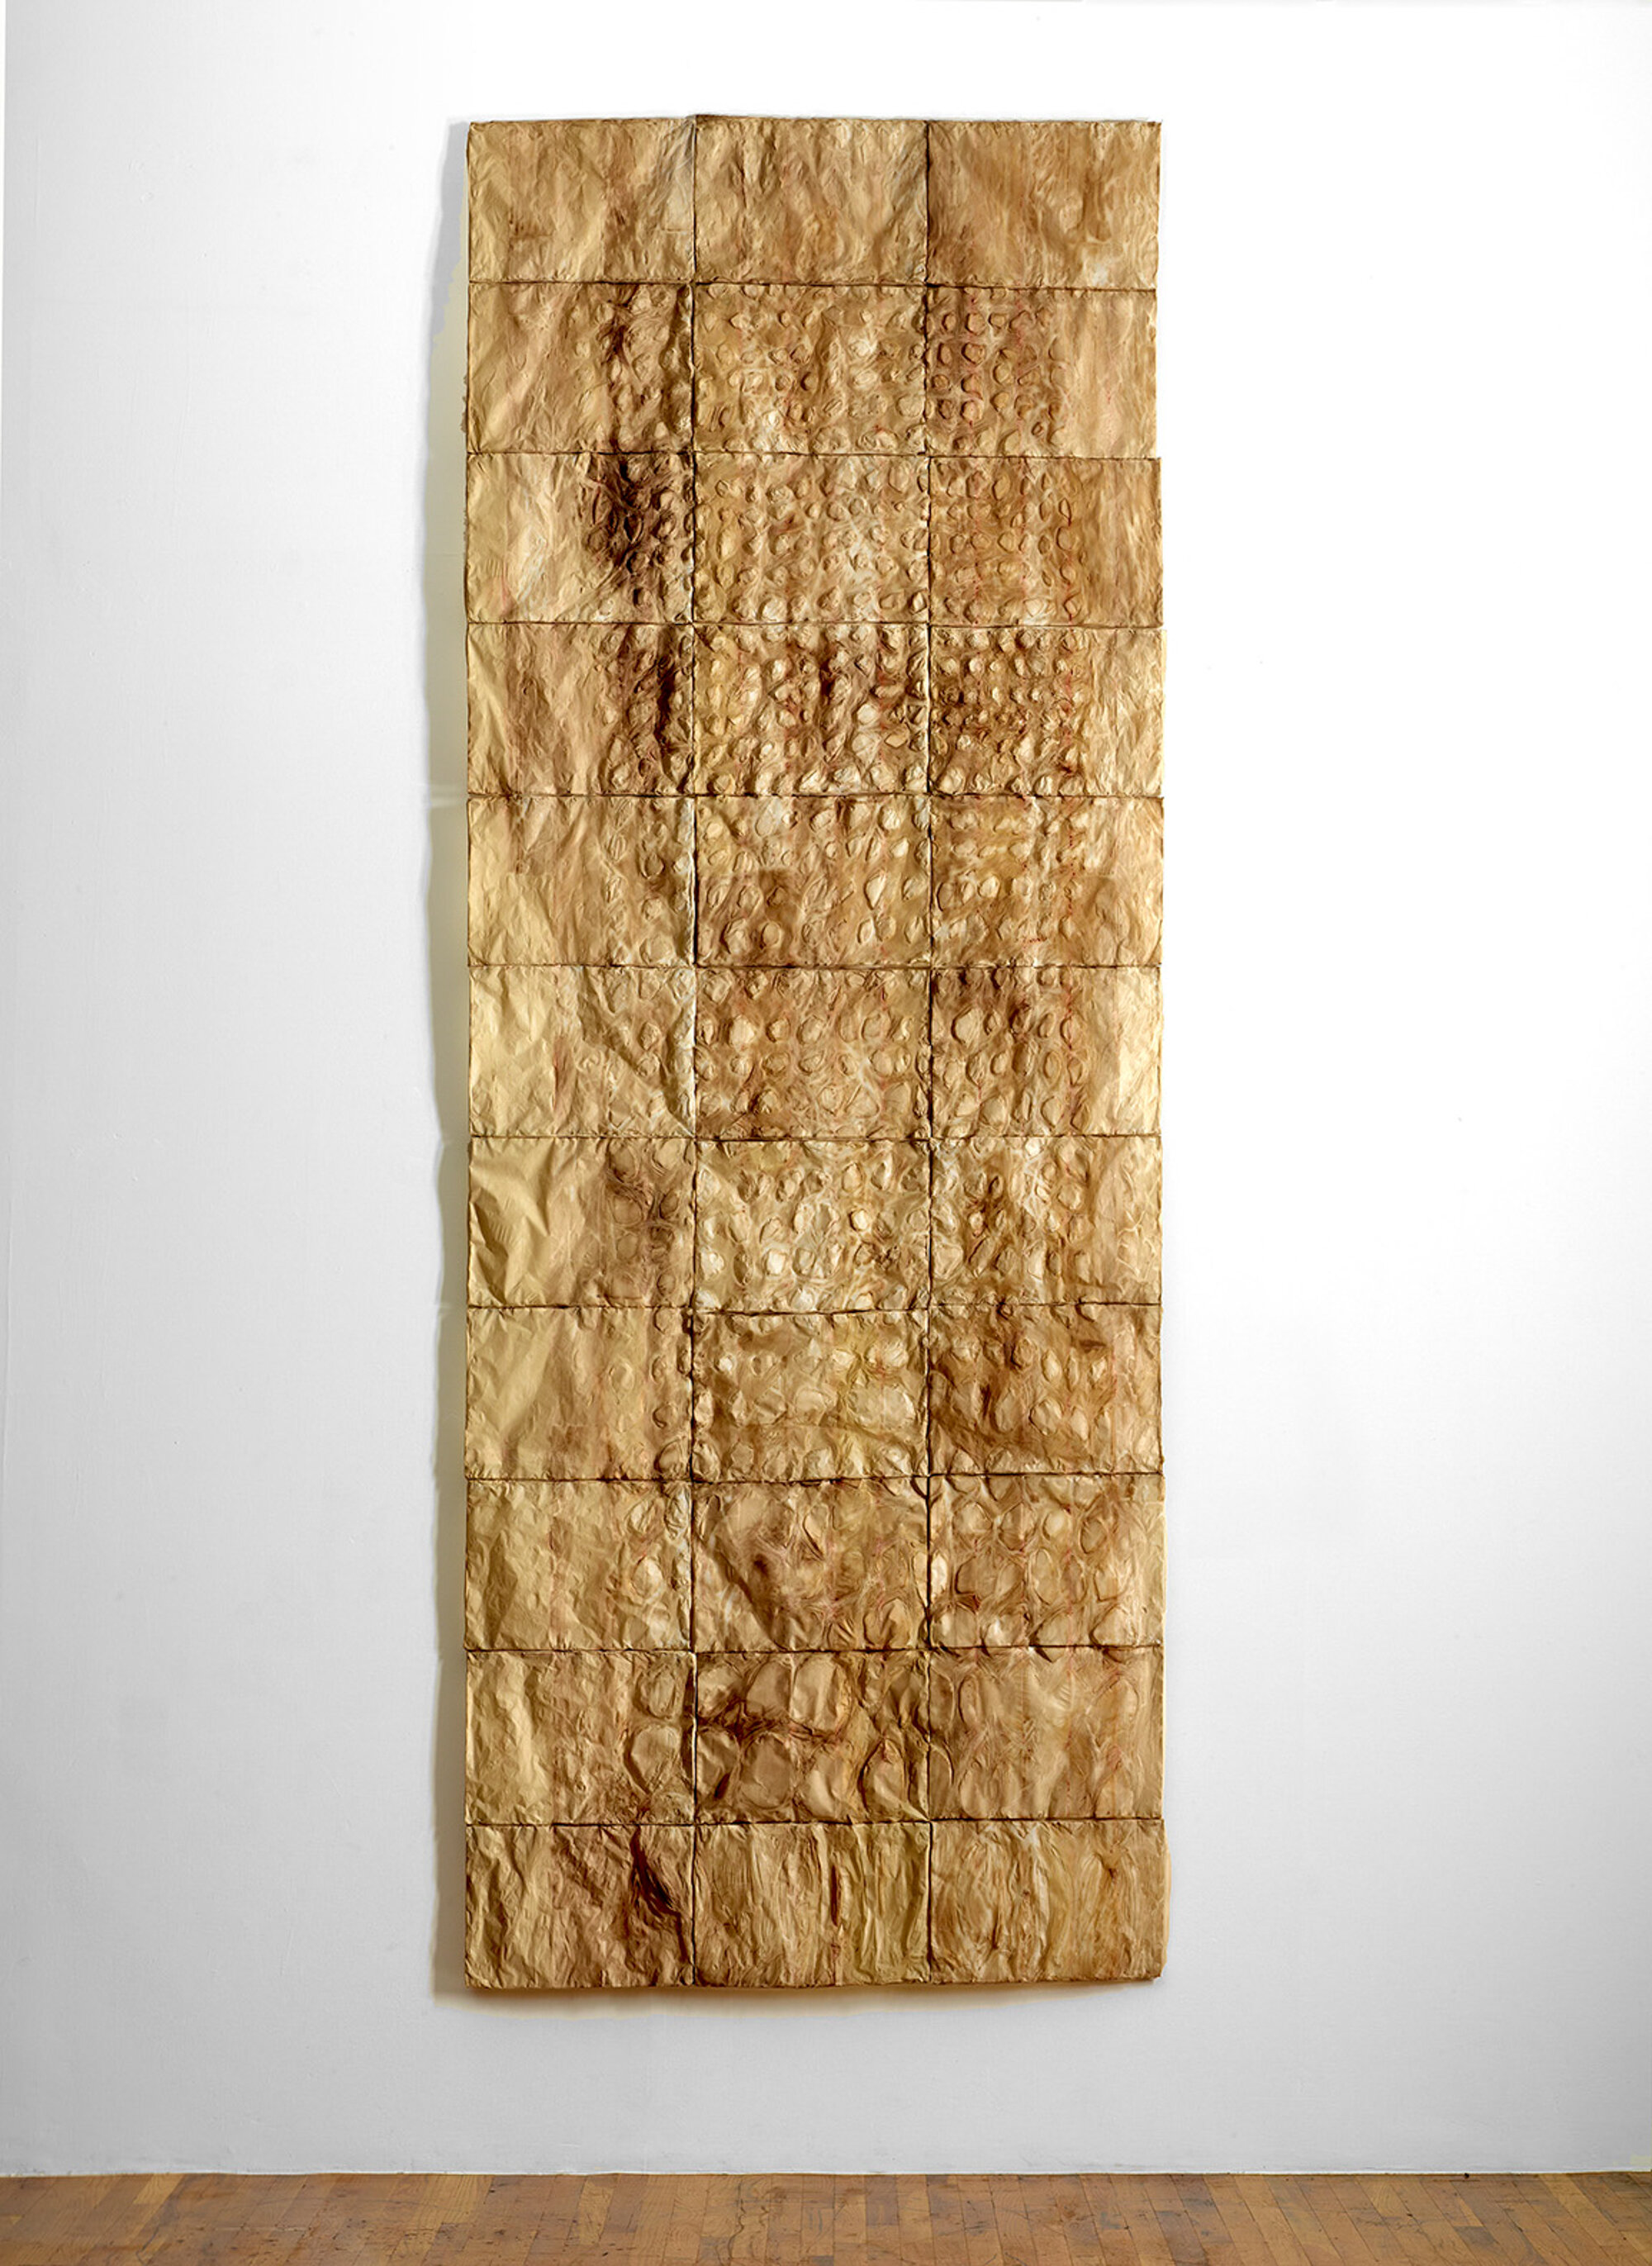       Hemorrhaging Cedar , 2012 Cast abaca paper 139 x 52 x 2 in.    MORE IMAGES   Yorkshire Sculpture Park  